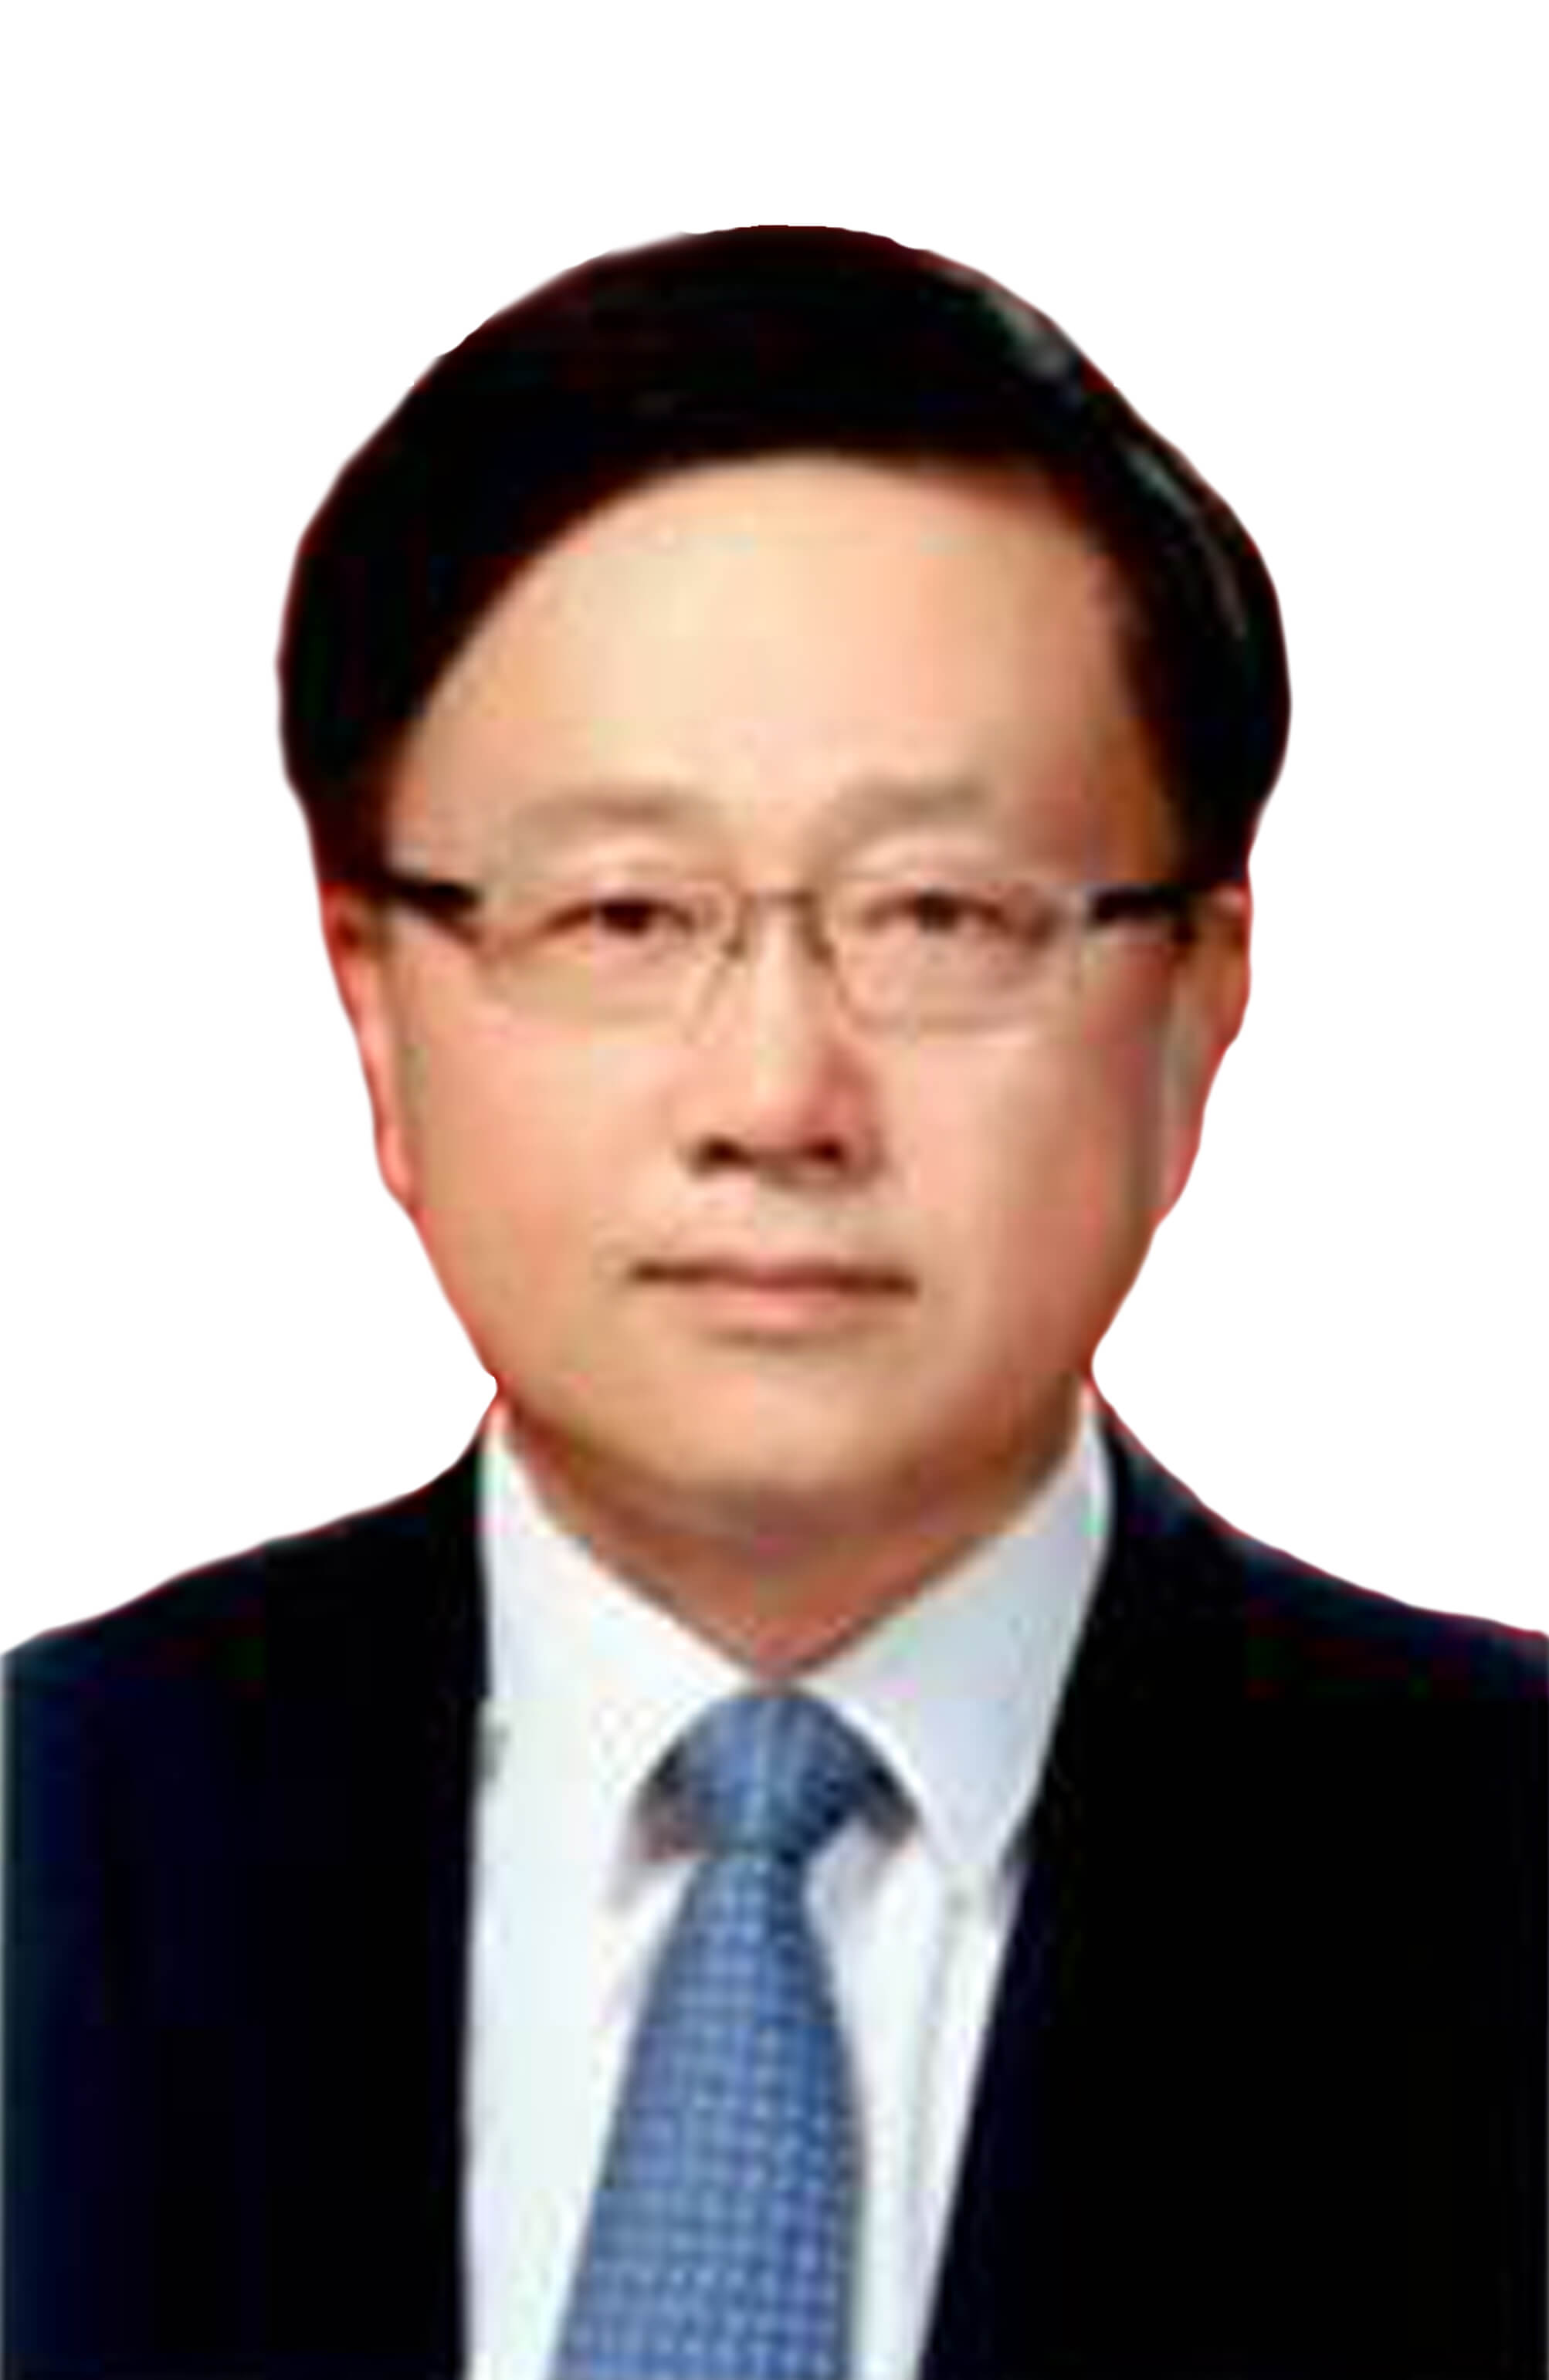 Komisaris Shinhan